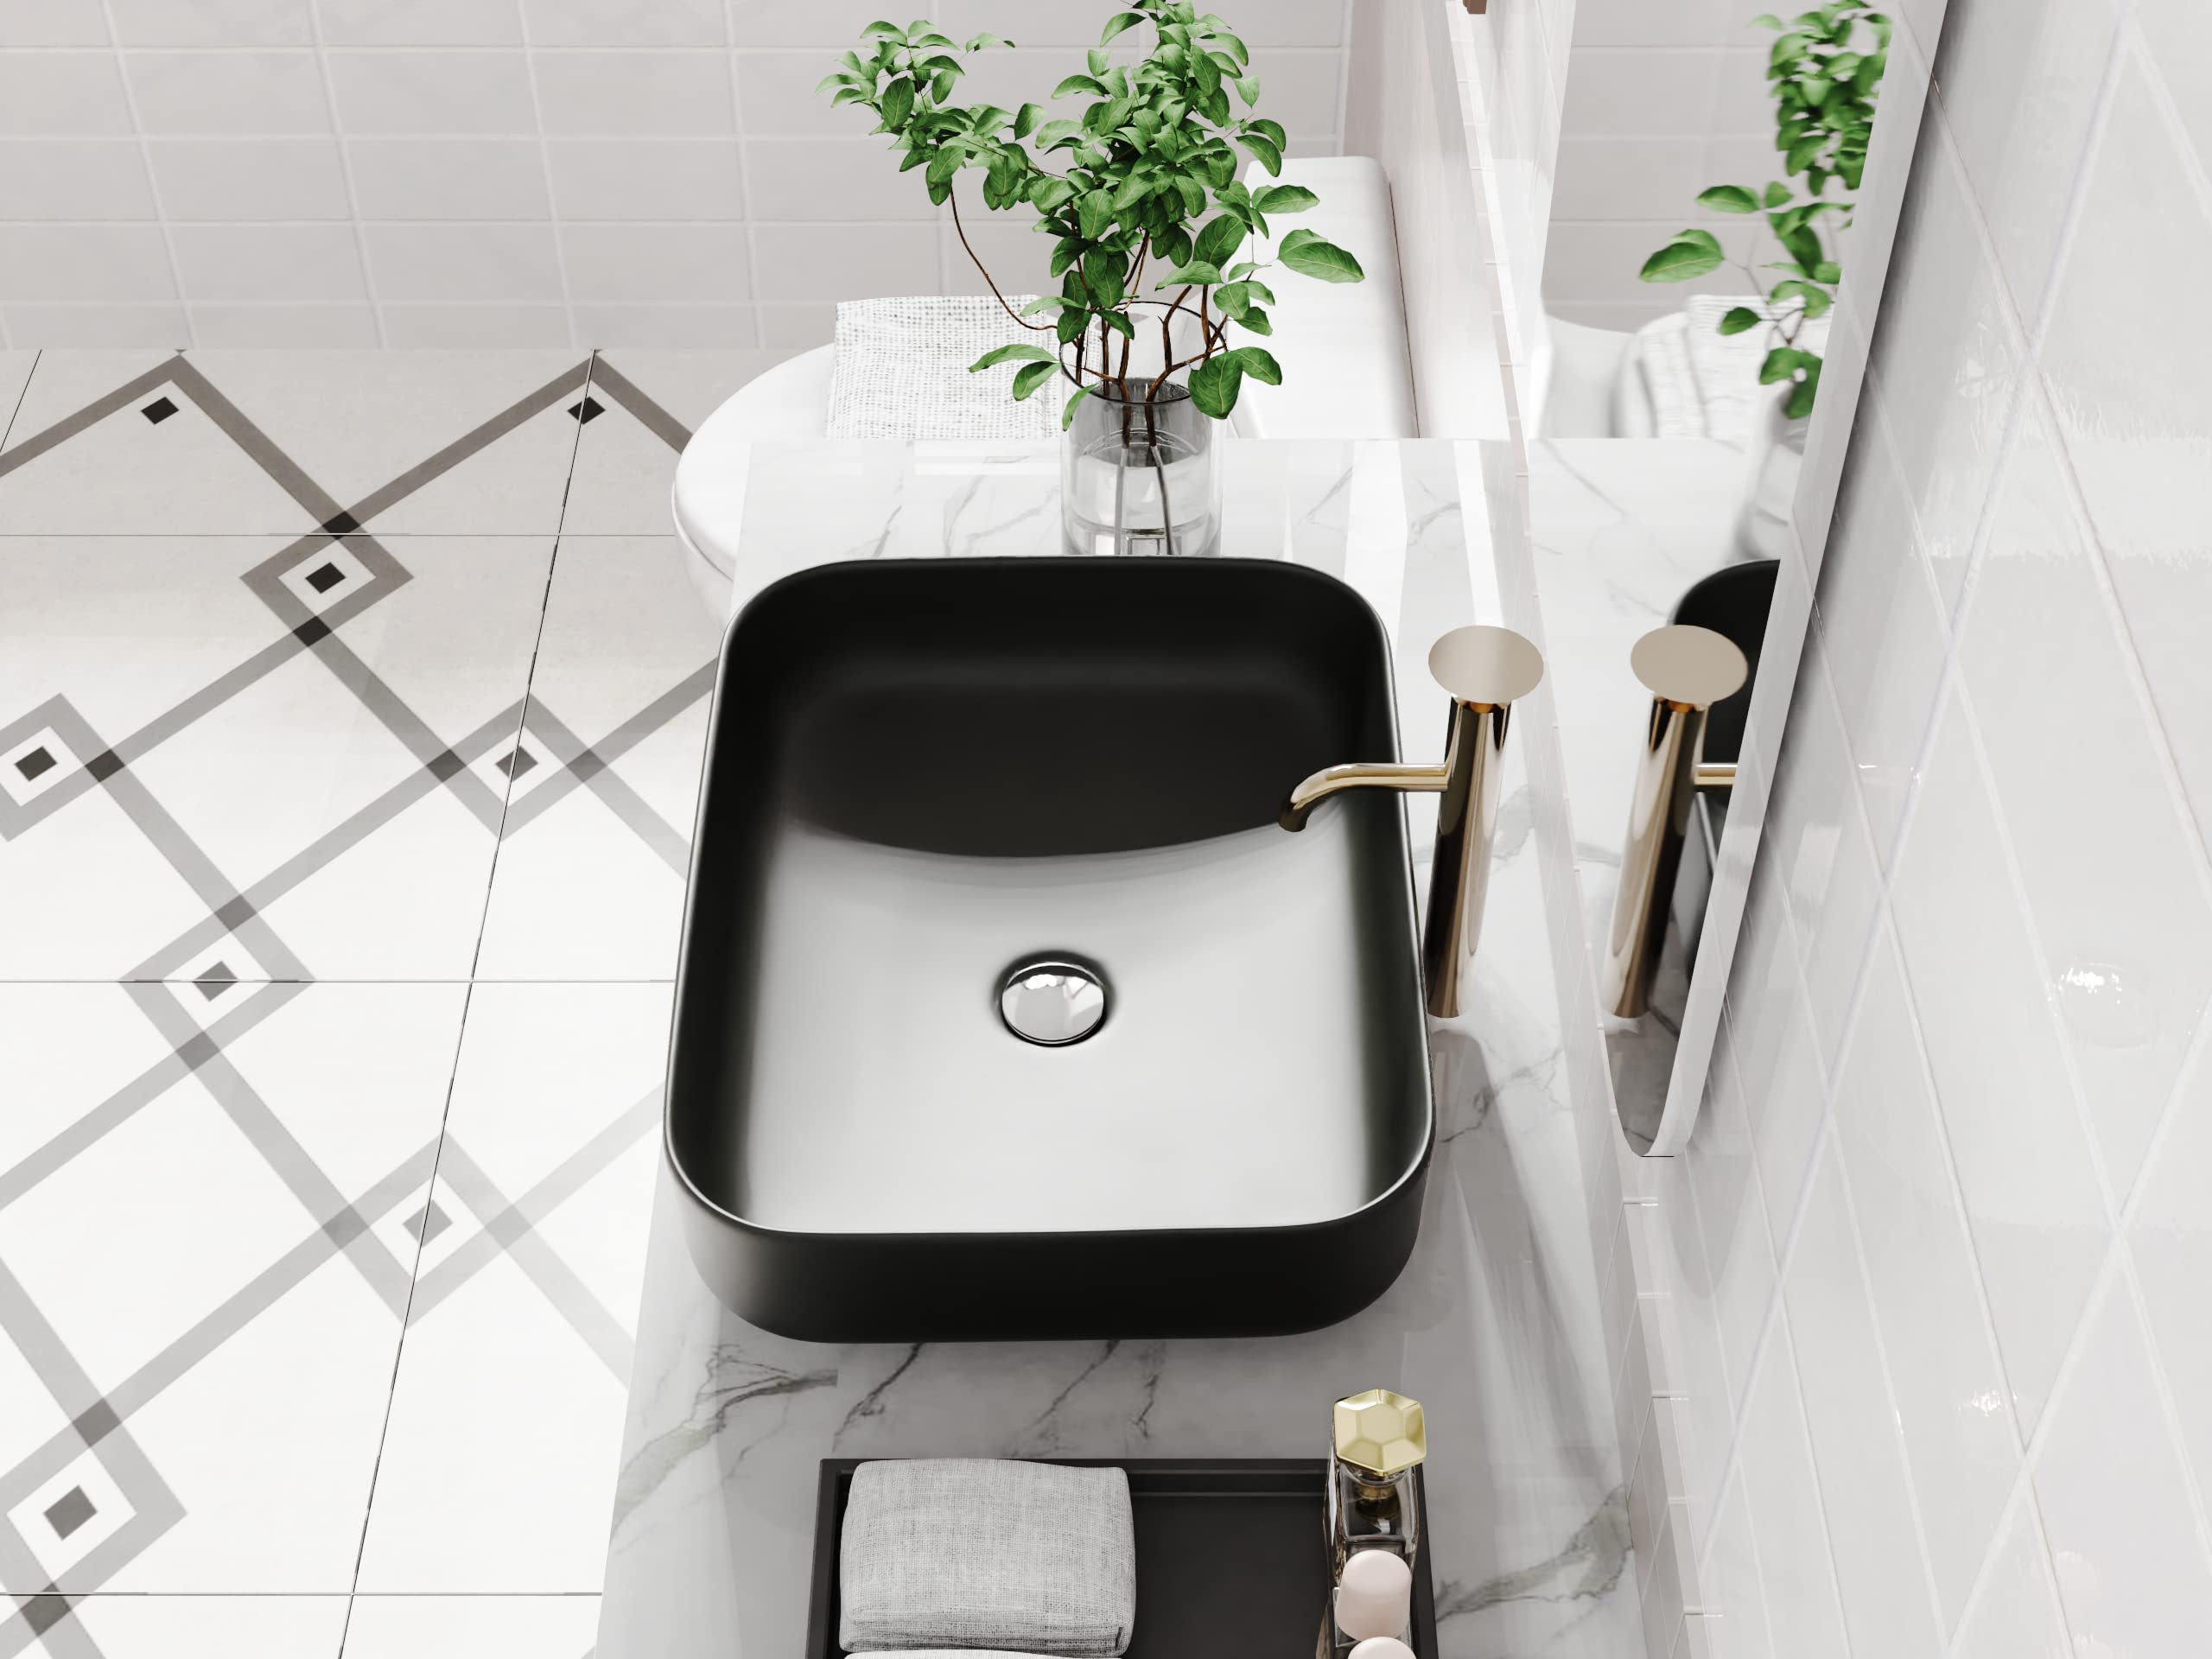 ELLAI Bathroom Vessel Sink Rectangle Bathroom Sink Bowl Above Counter Porcelain Ceramic Top Mount Rectanglar Sink Countertop Vanity Art Basin for Bathroom 19.7"x15.2"x5.4” Matte Black